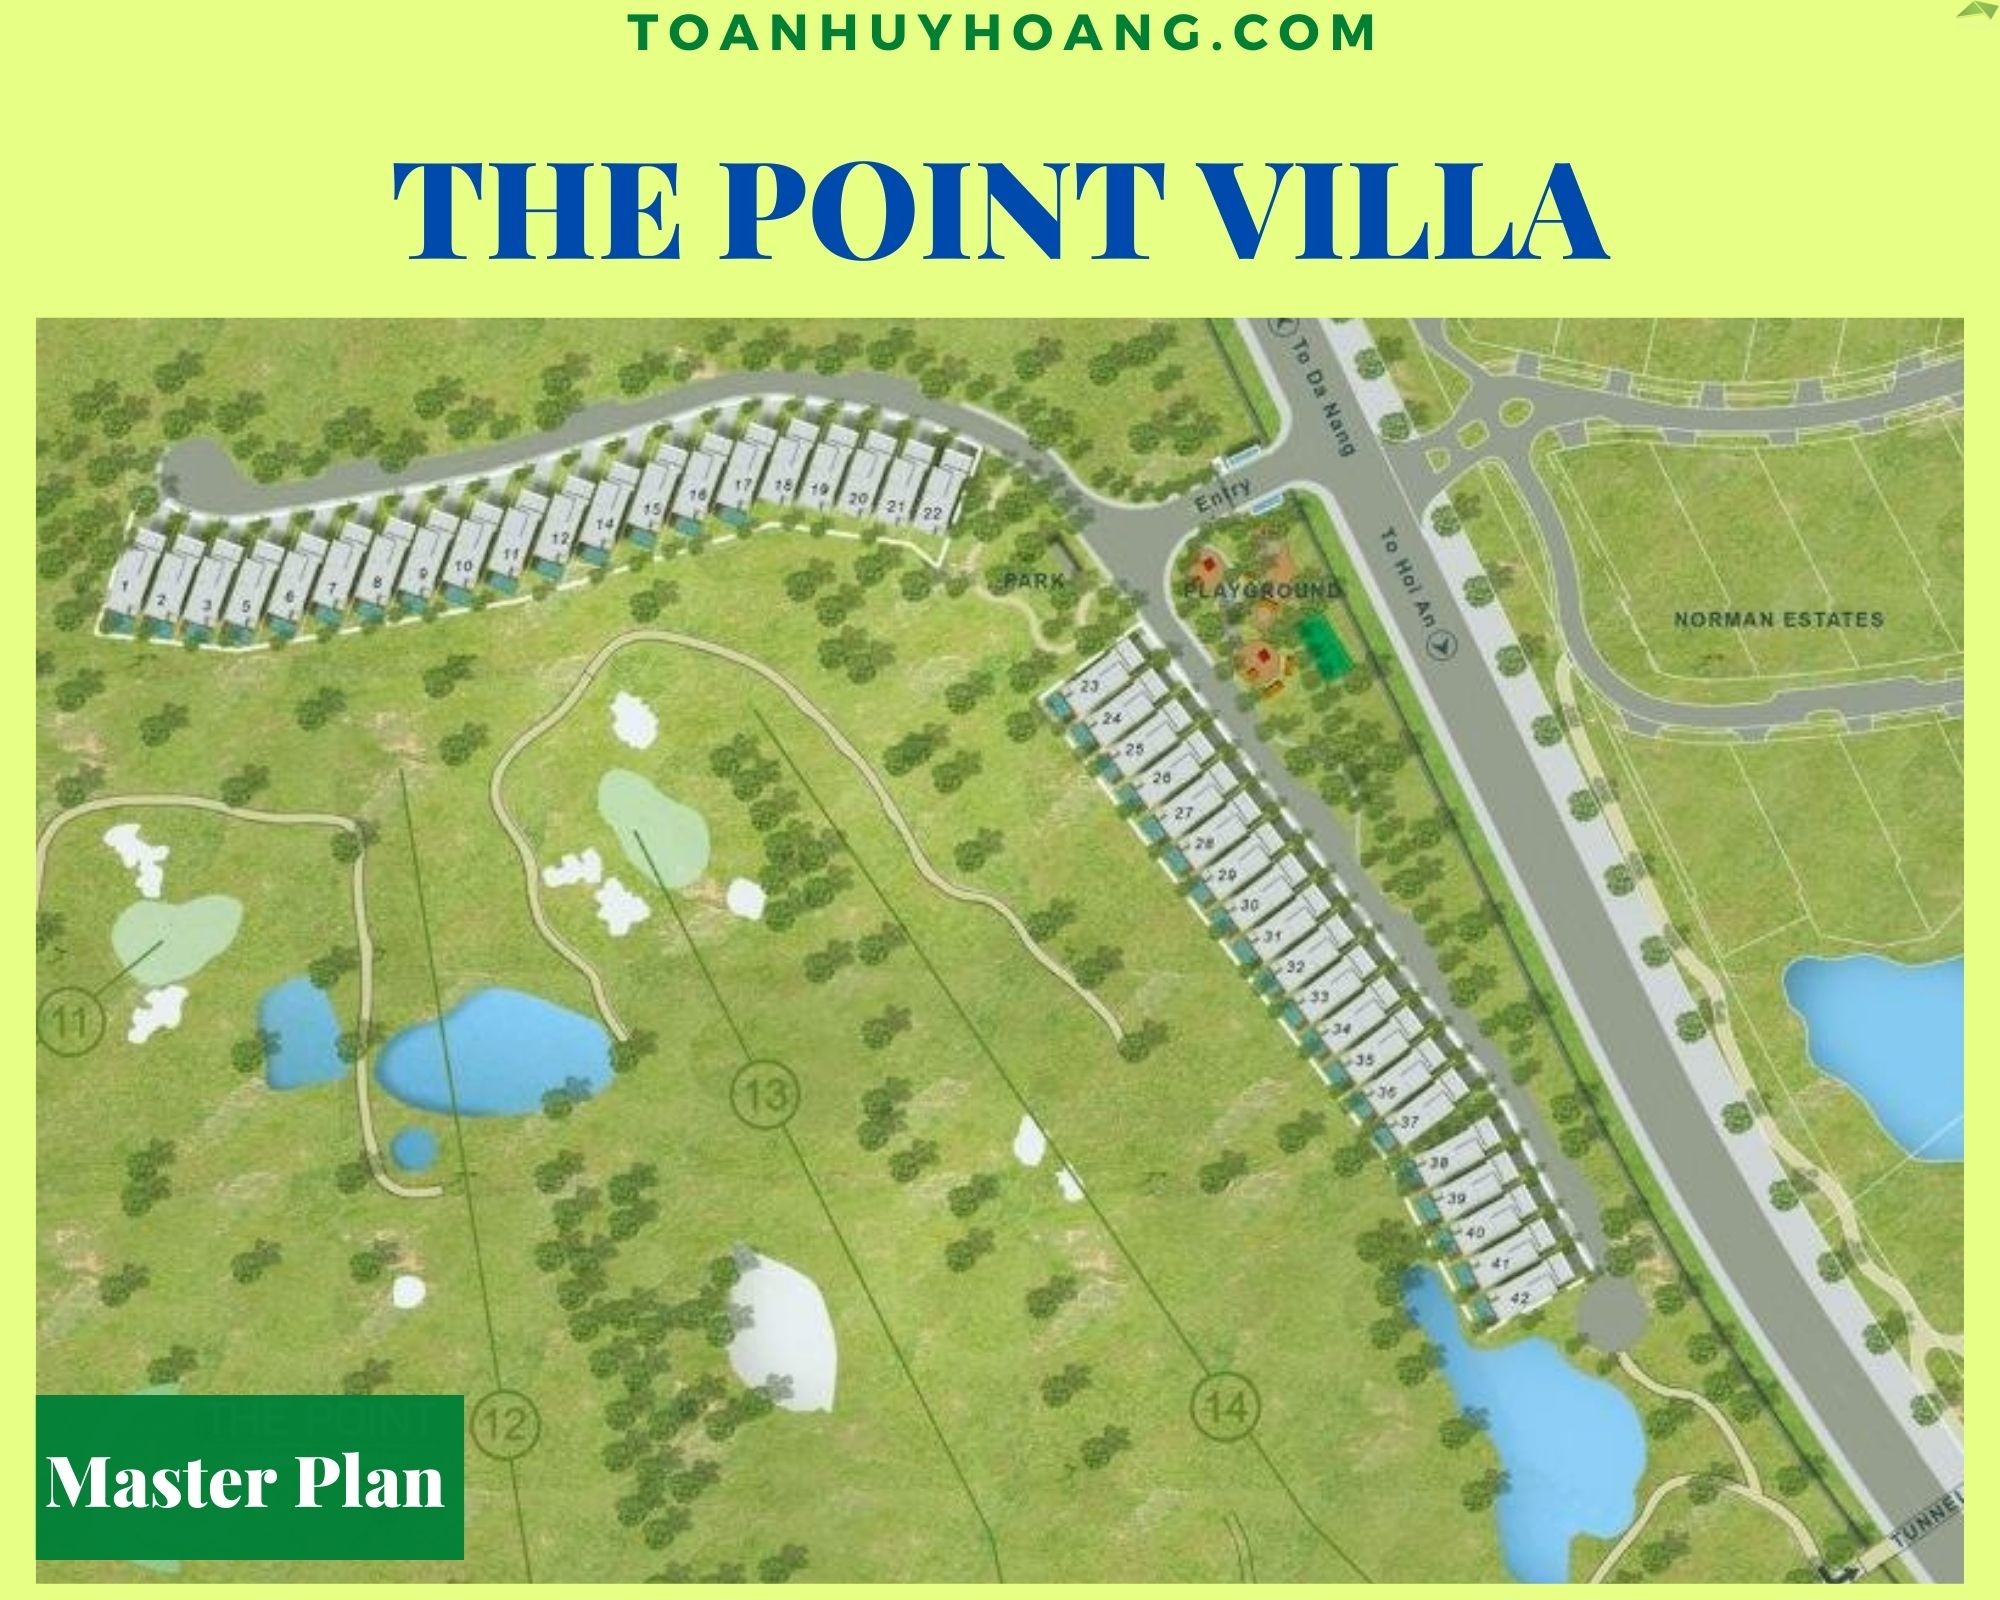 The Point Villa master plan